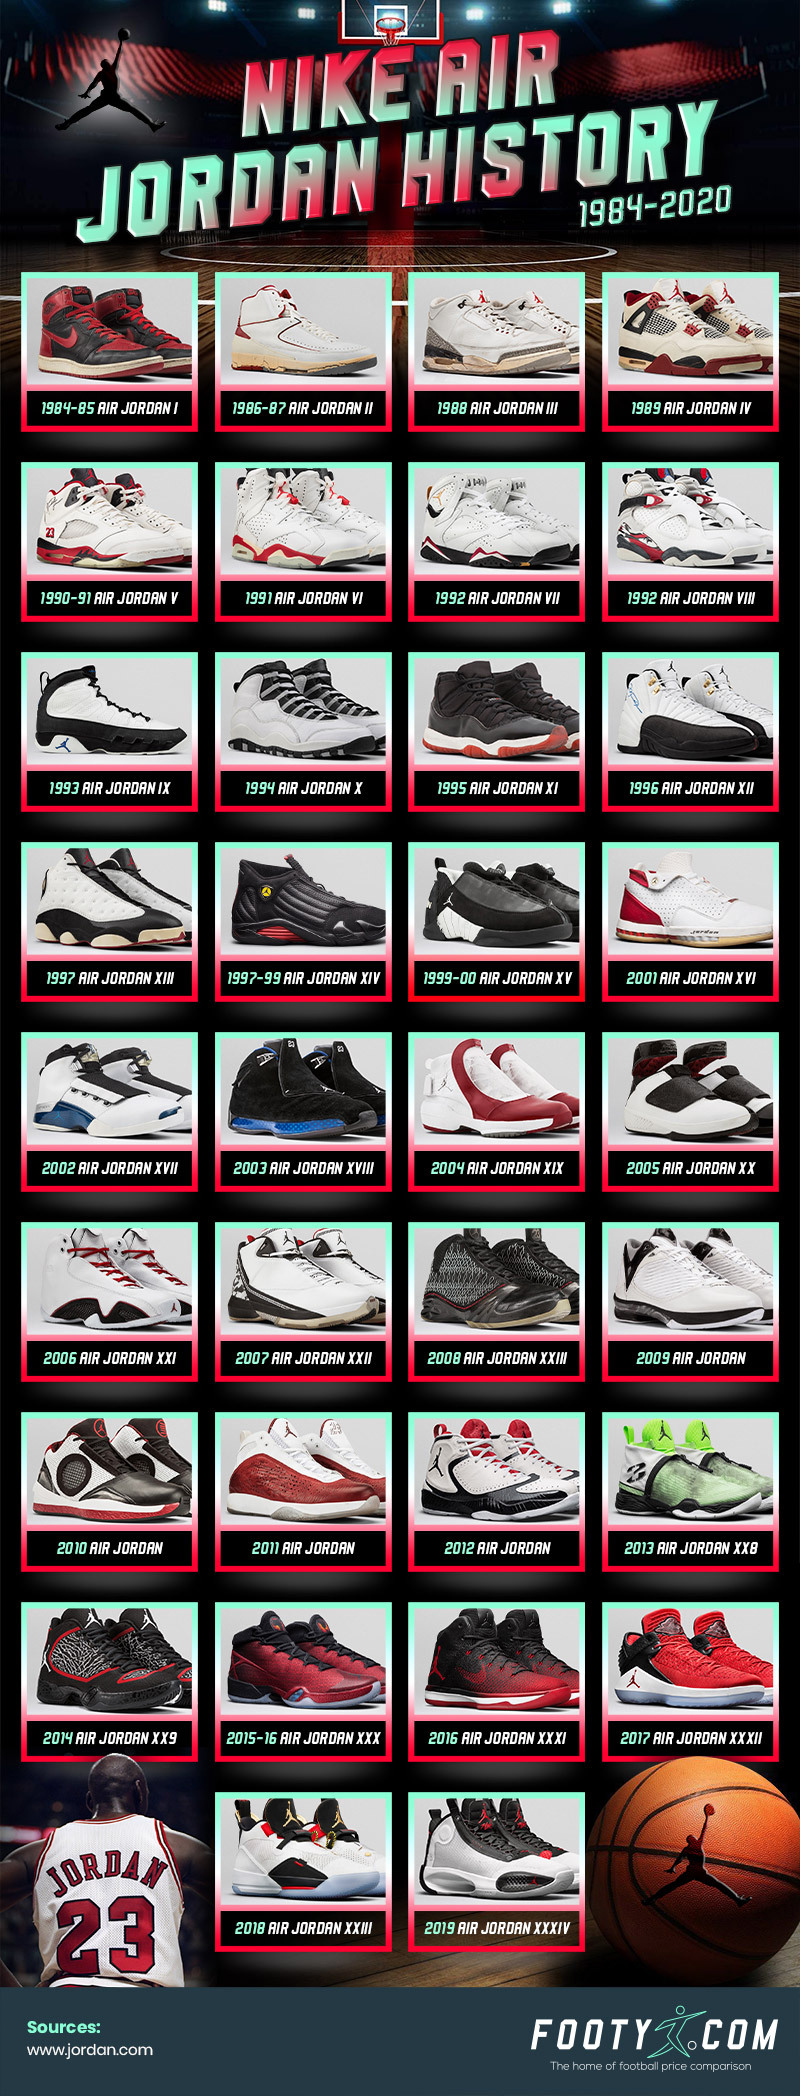 all air jordan shoes ever made